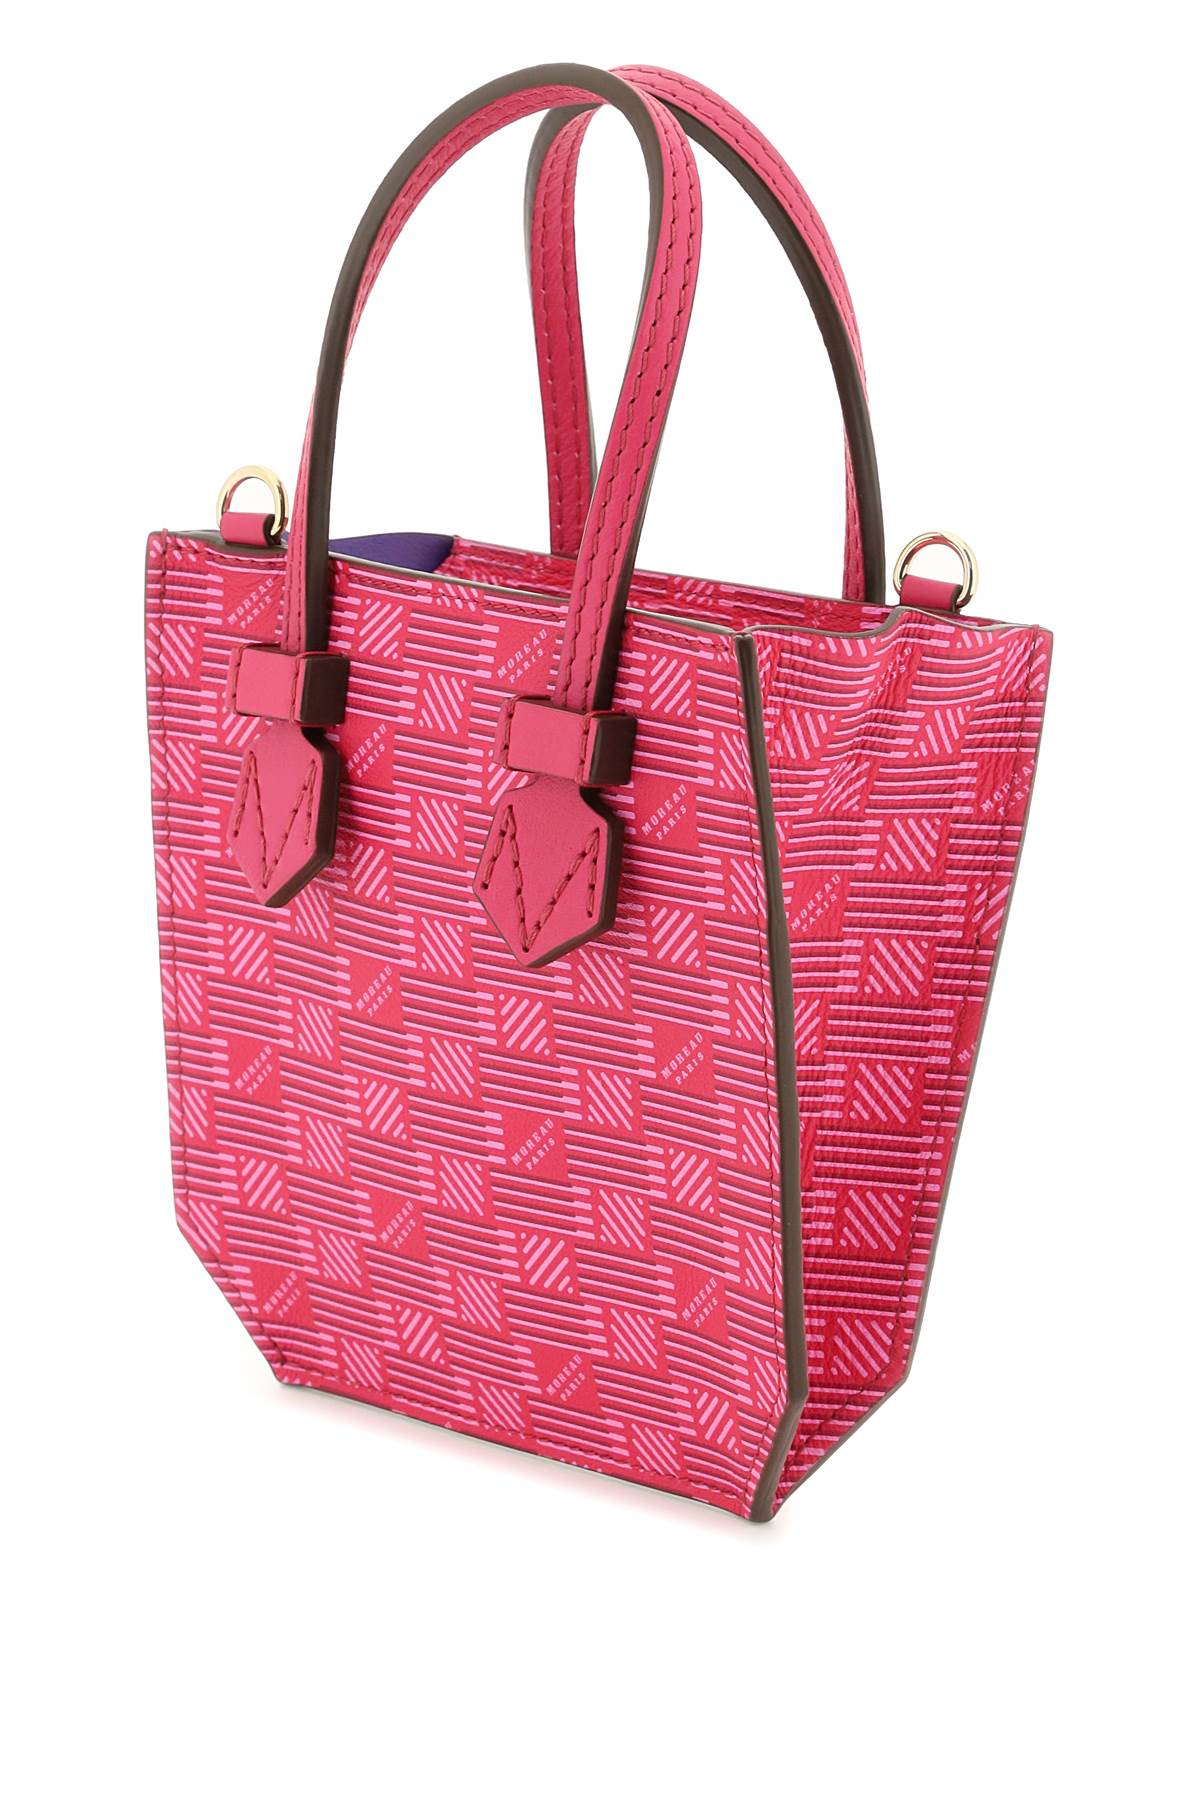 時尚風格 粉紅迷你手提包 // Fashionable Style - Pink Mini Handbag